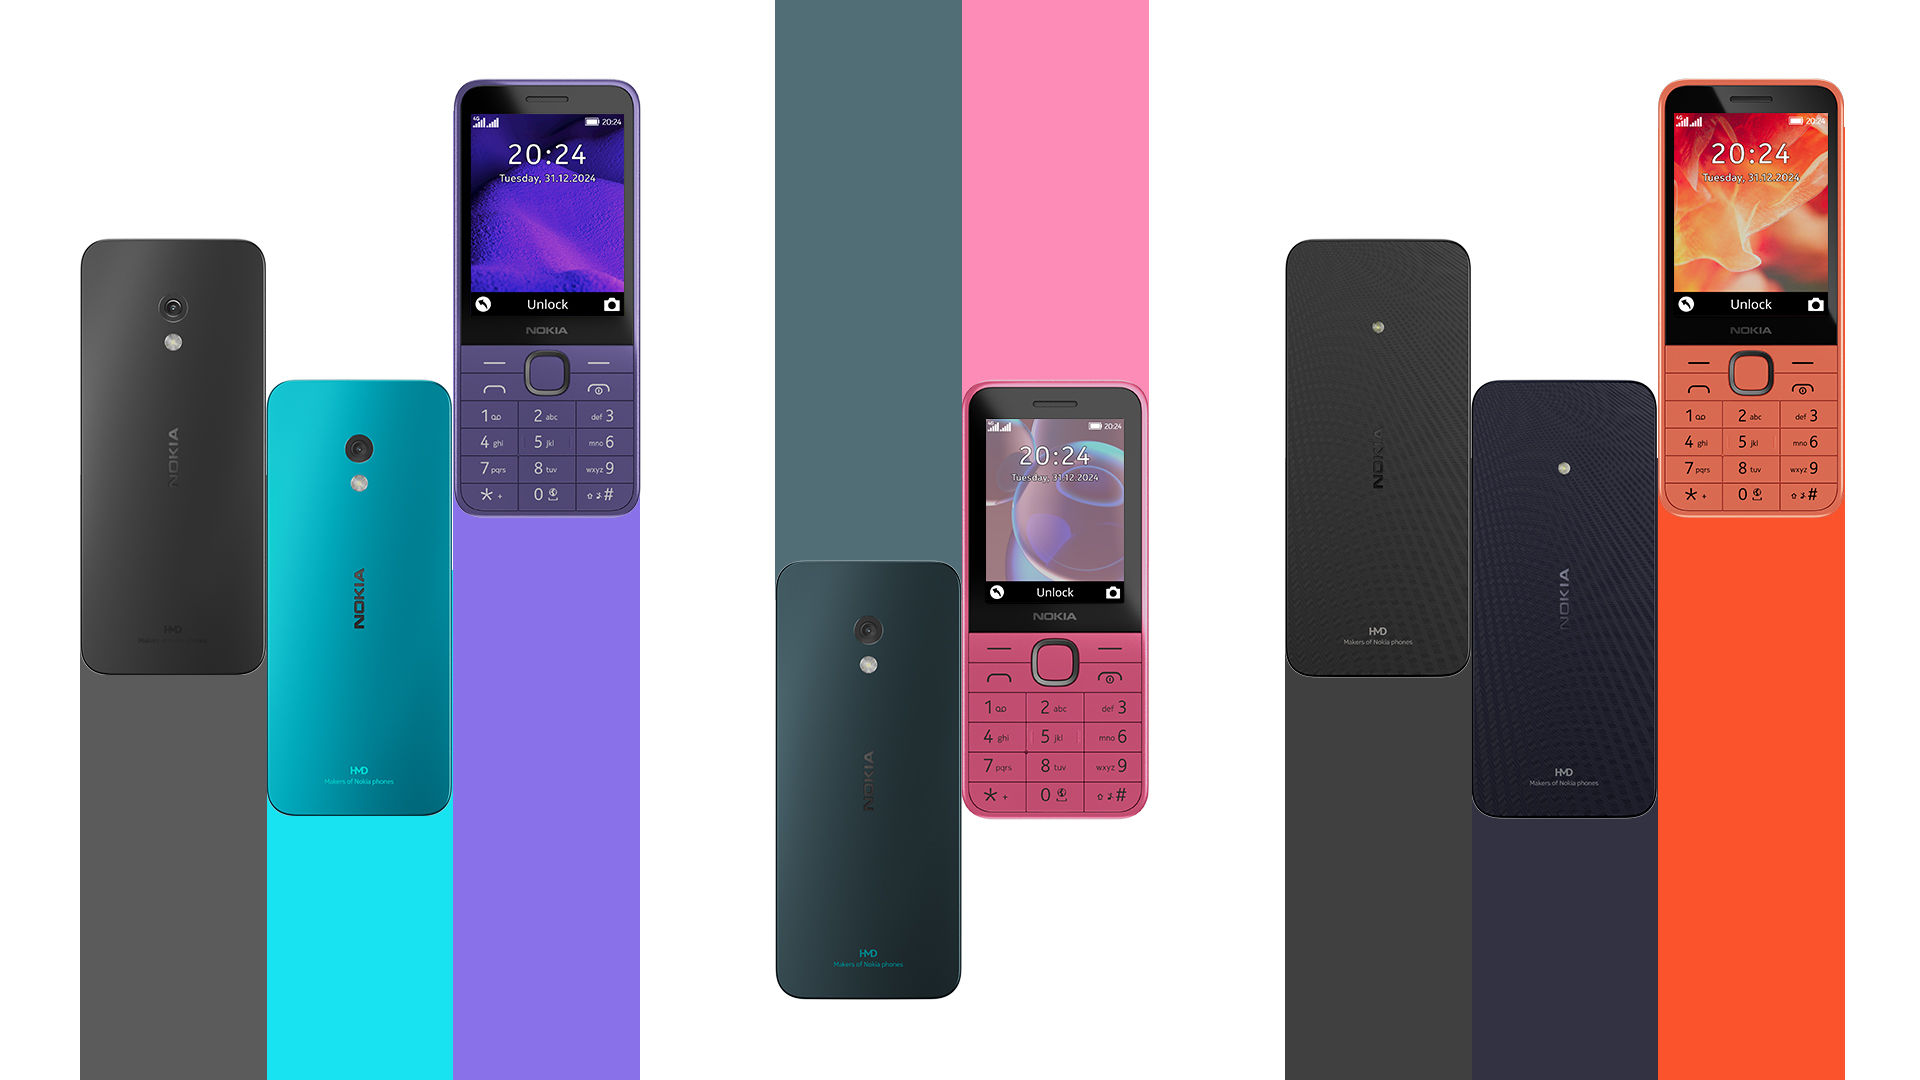 Nokia candybar phones from HMD